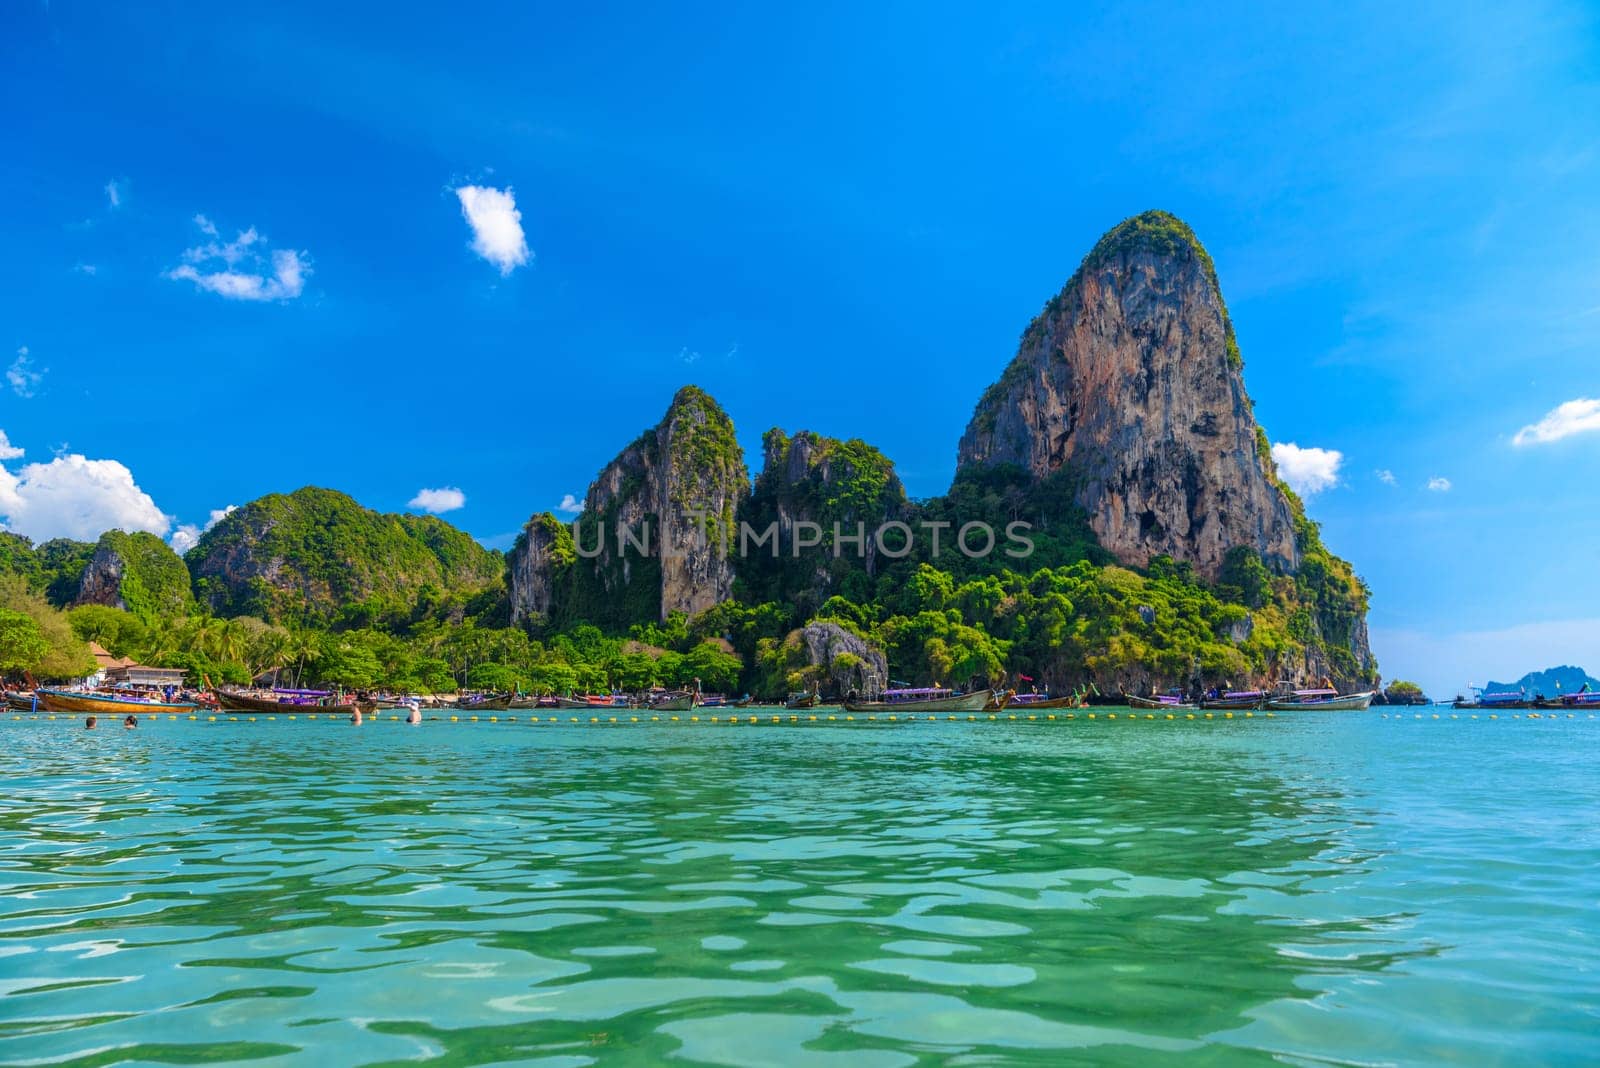 Rocks and cliffs, water and tropical white sand beach, Railay beach west, Ao Nang, Krabi, Thailand.